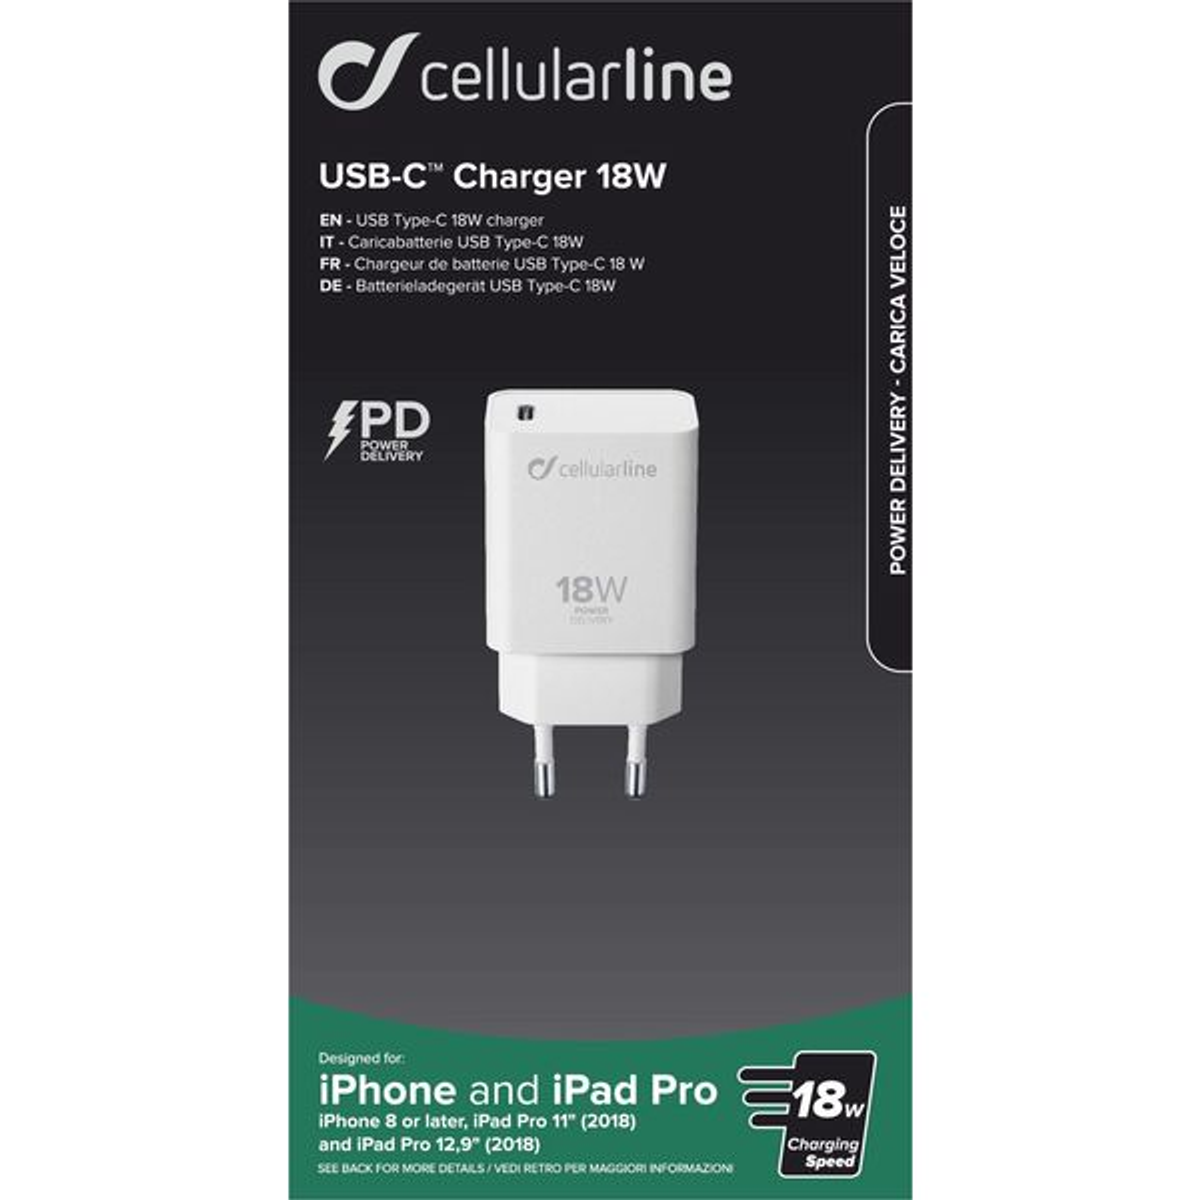 CELLULAR LINE Apple, ACHIPHKIT Weiß 60759 USB-C CHARGERPD Ladegerät